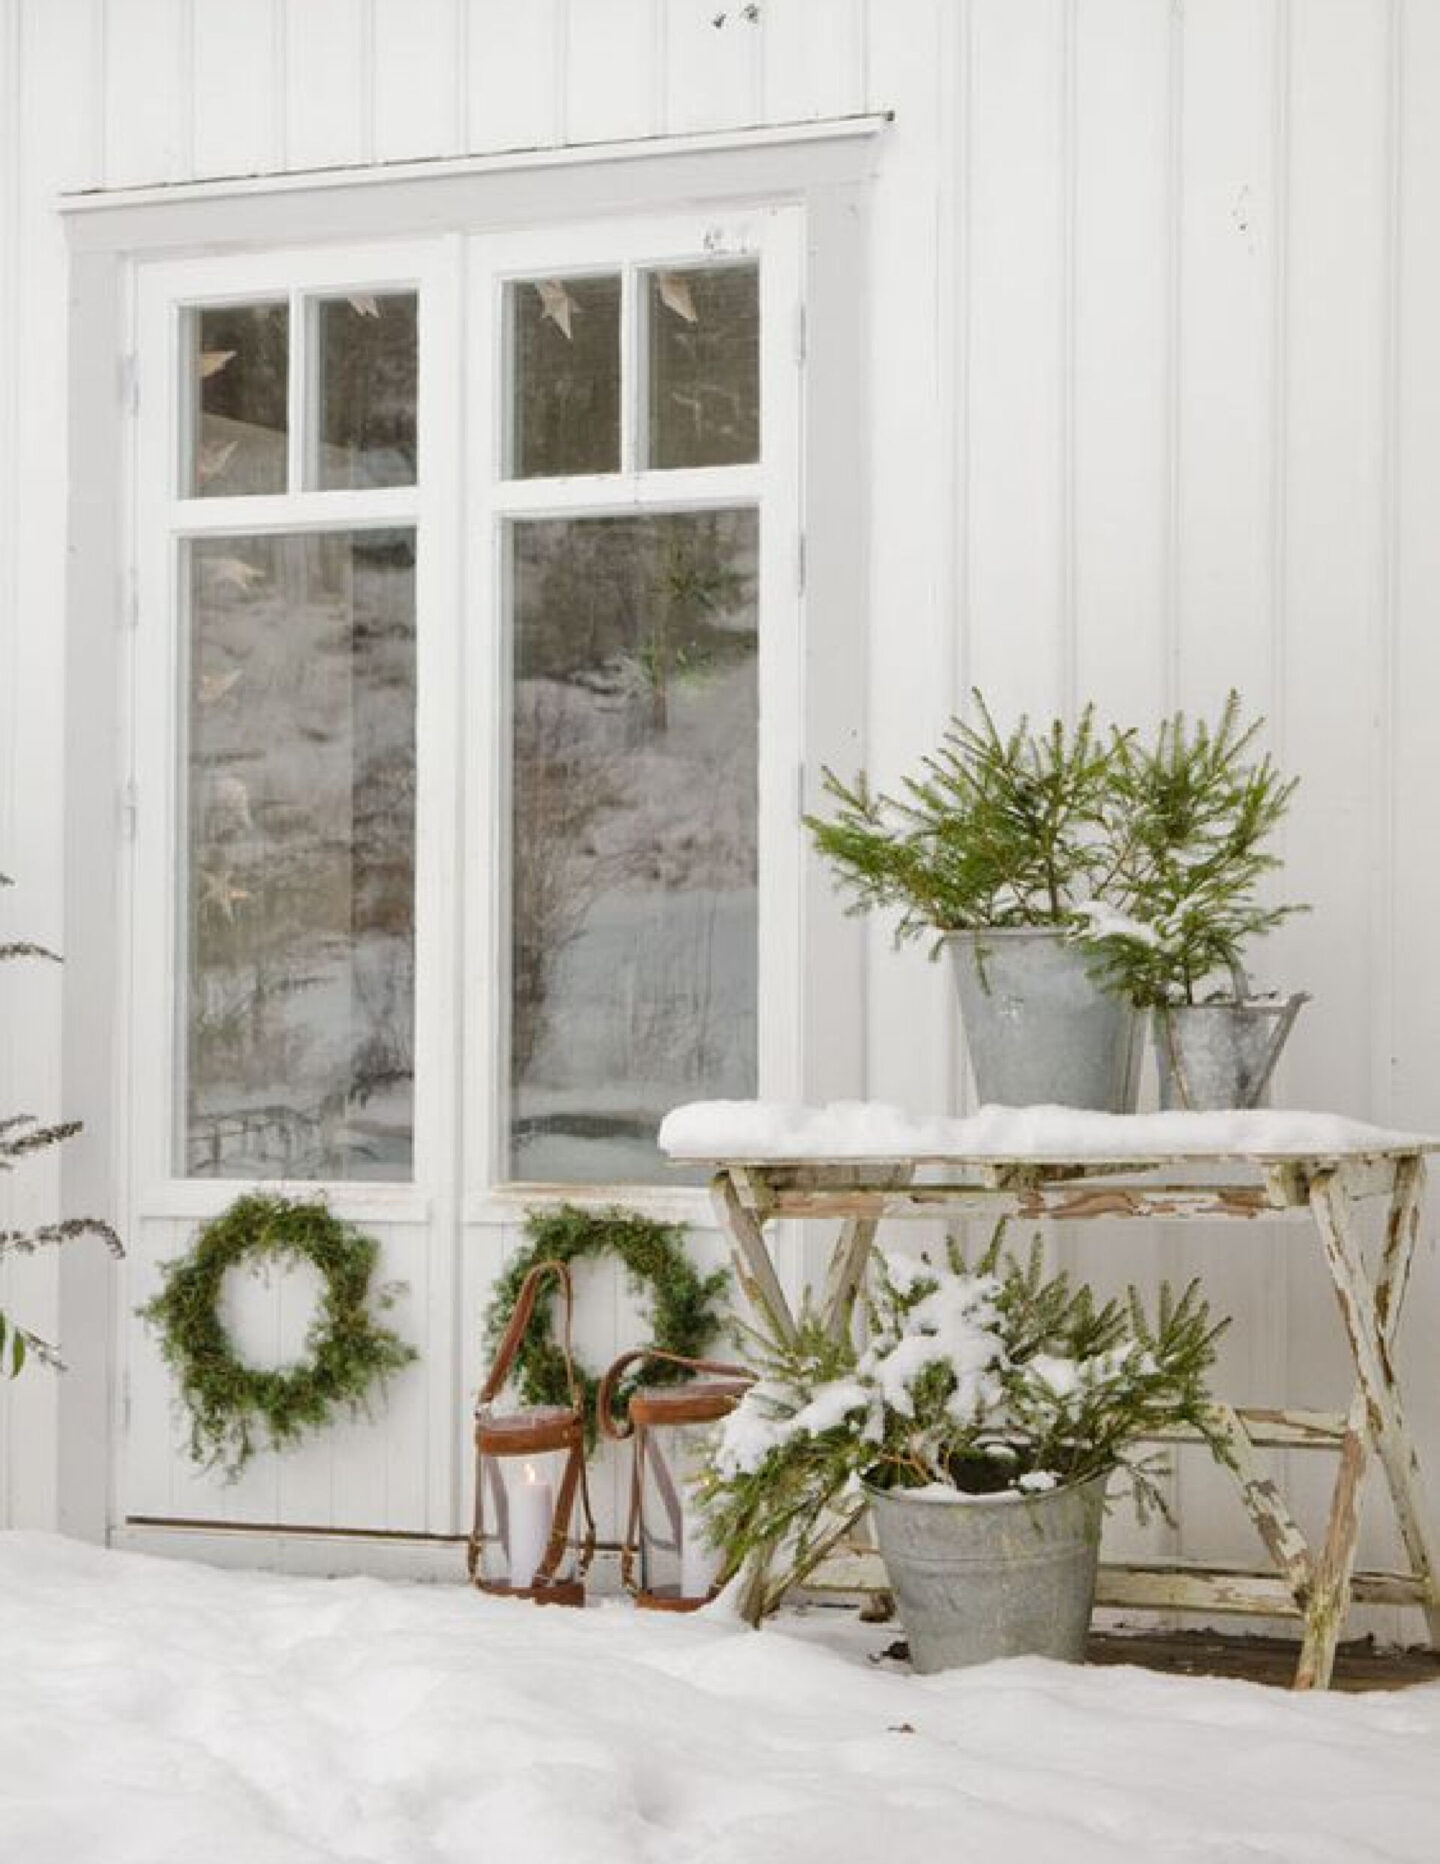 Beautiful exteriors and front doors decorated for Christmas! #christmasdecor #exteriors #outdoordecor #christmas